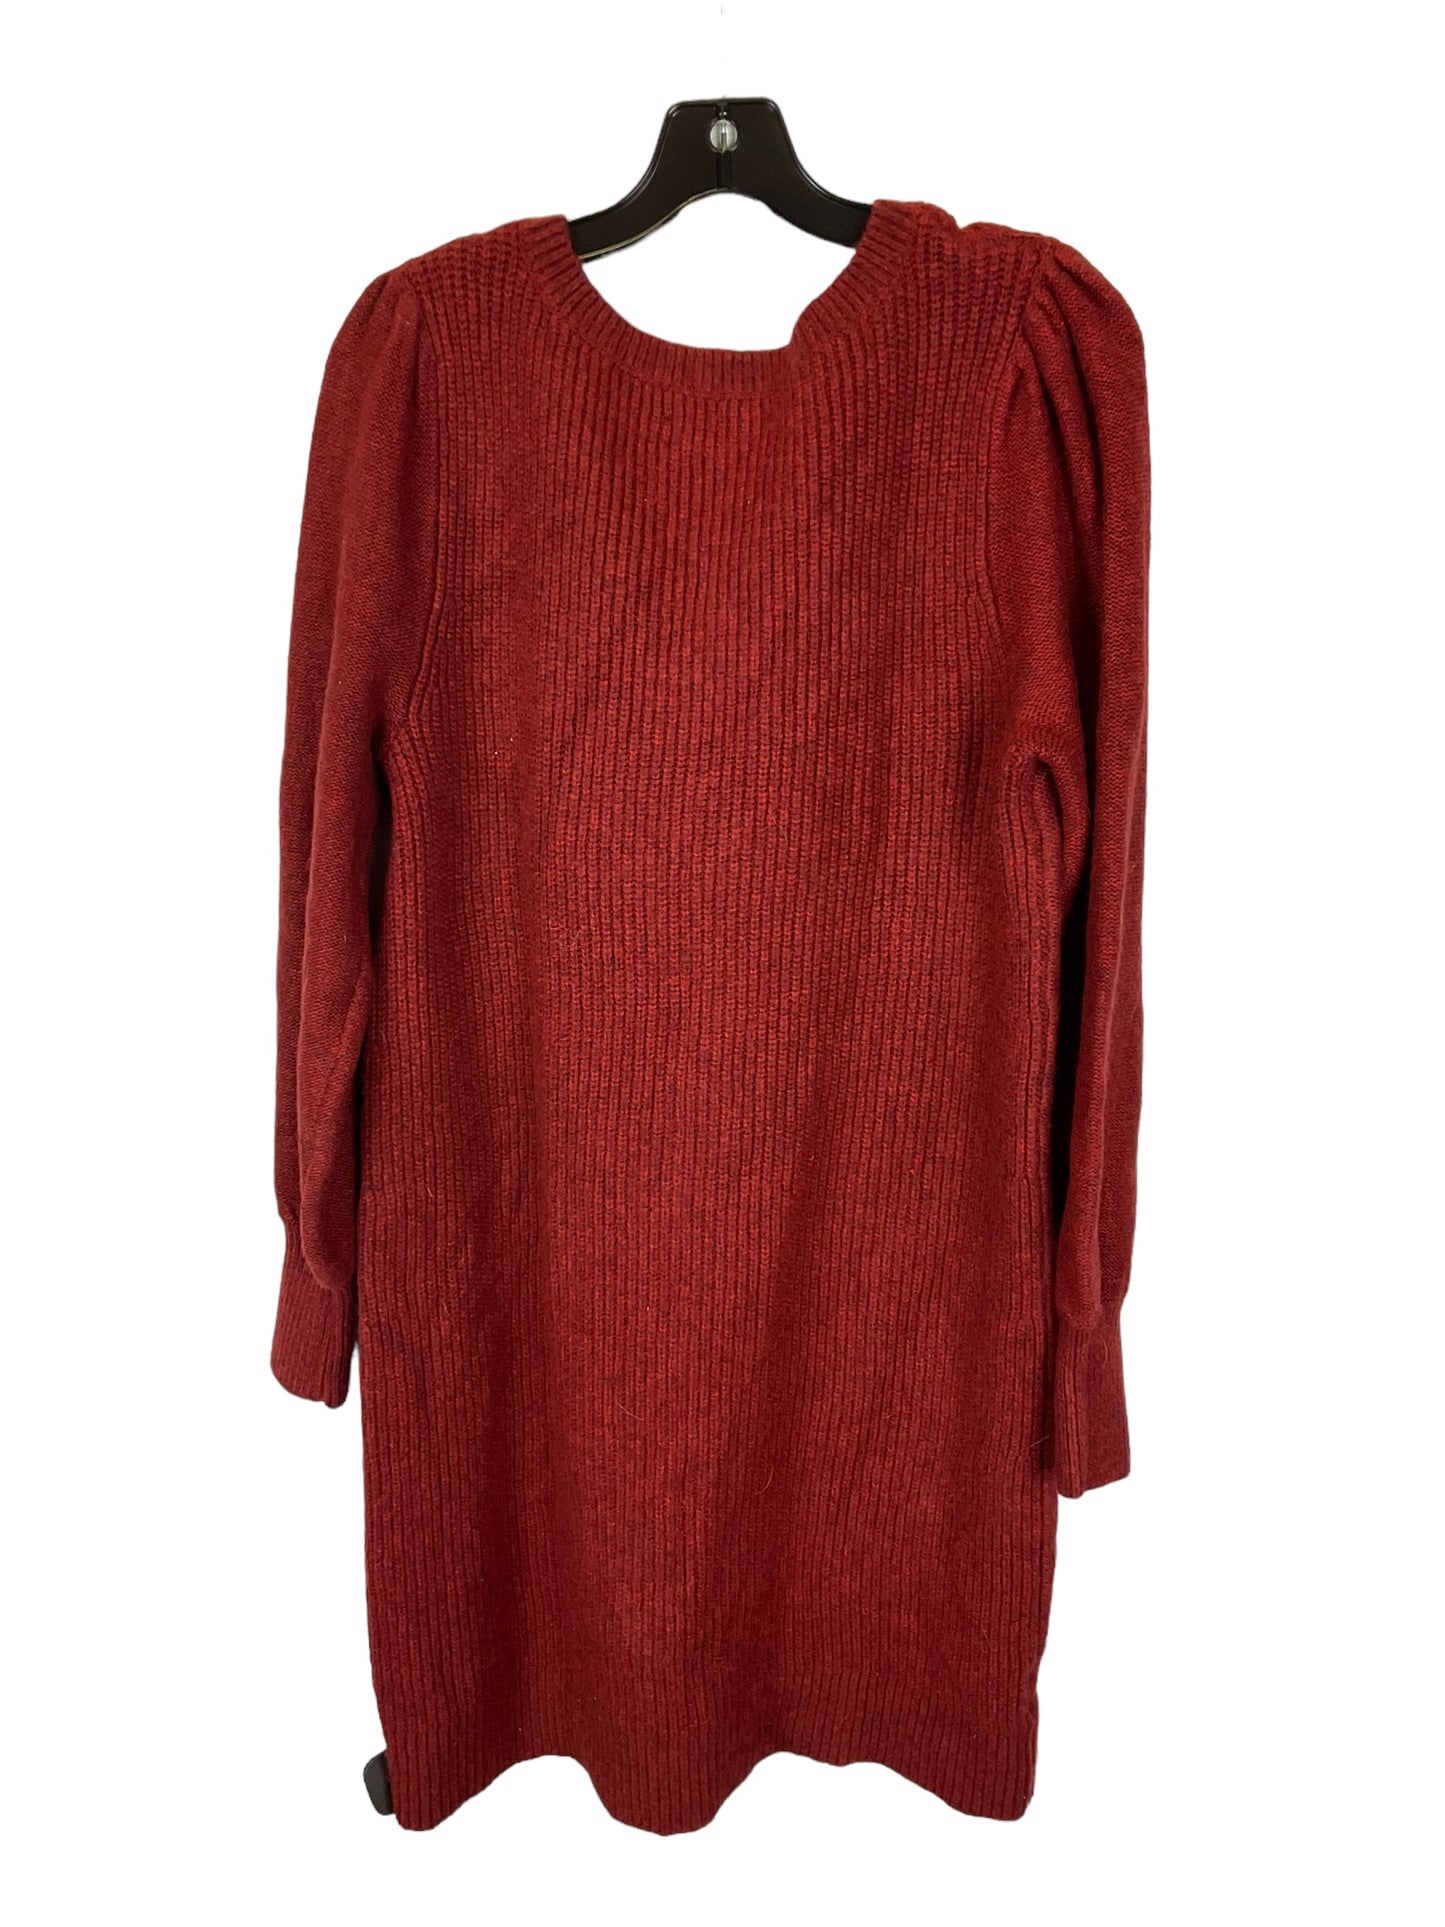 Dress Sweater By Loft  Size: M